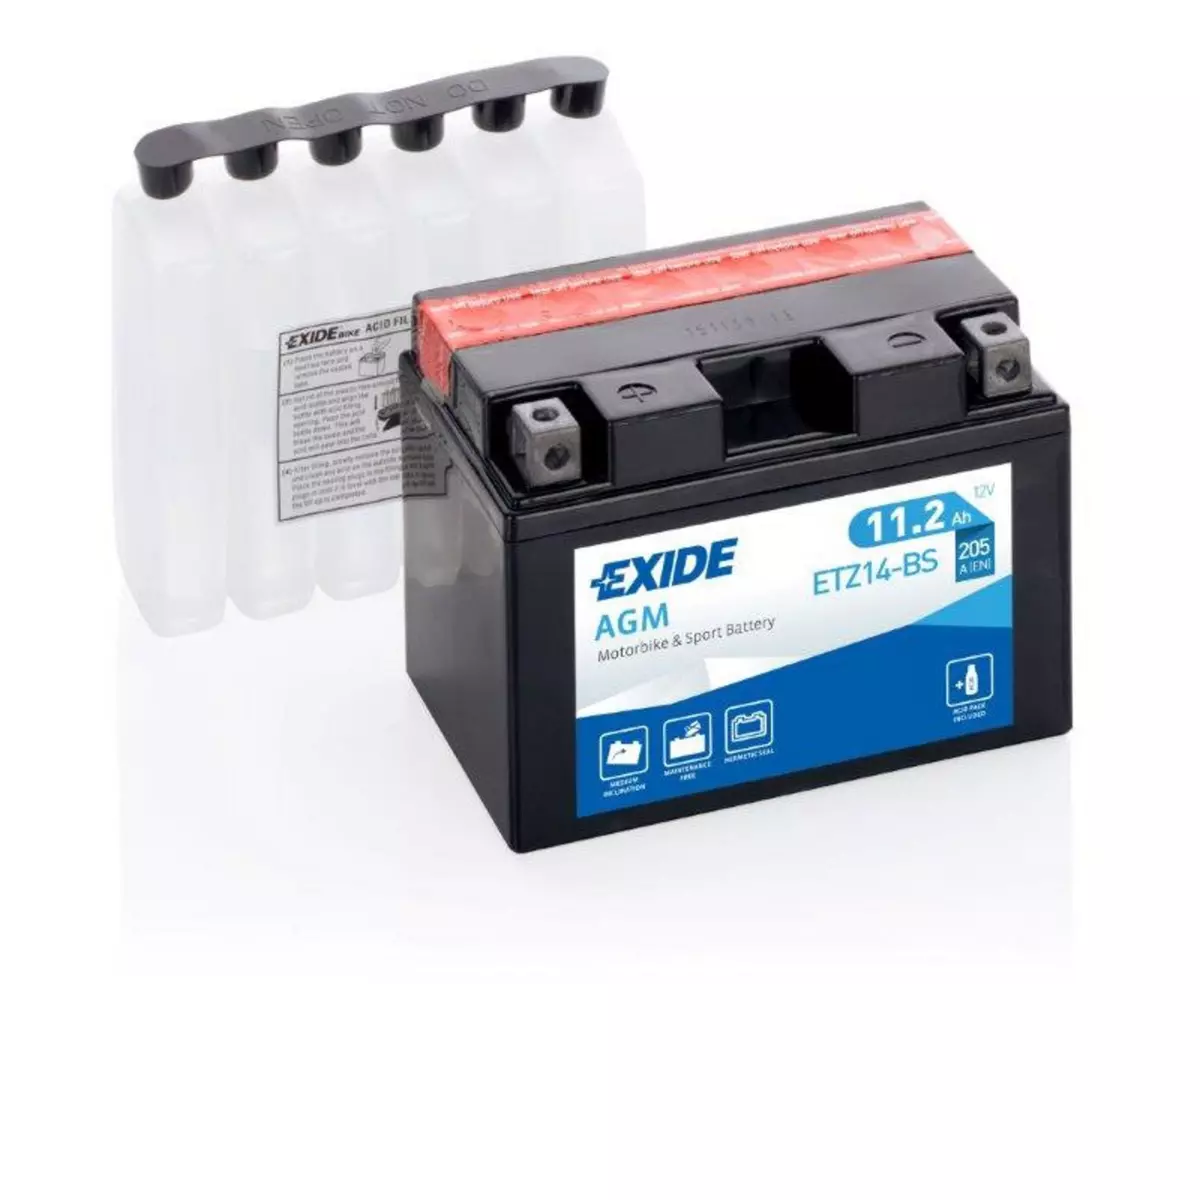 EXIDE Batterie moto Exide ETZ14-BS YTZ14-BS 12v 11.2ah 230A